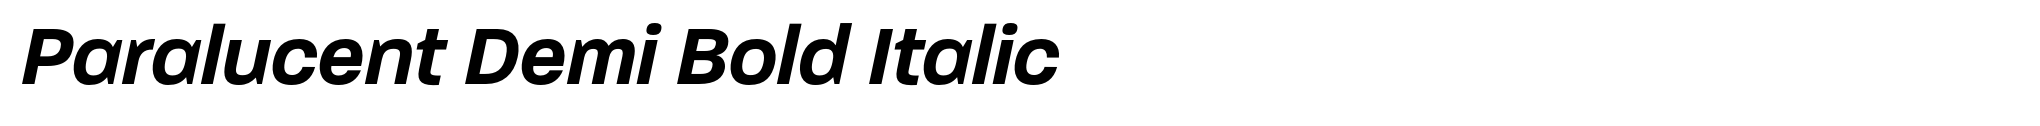 Paralucent Demi Bold Italic image